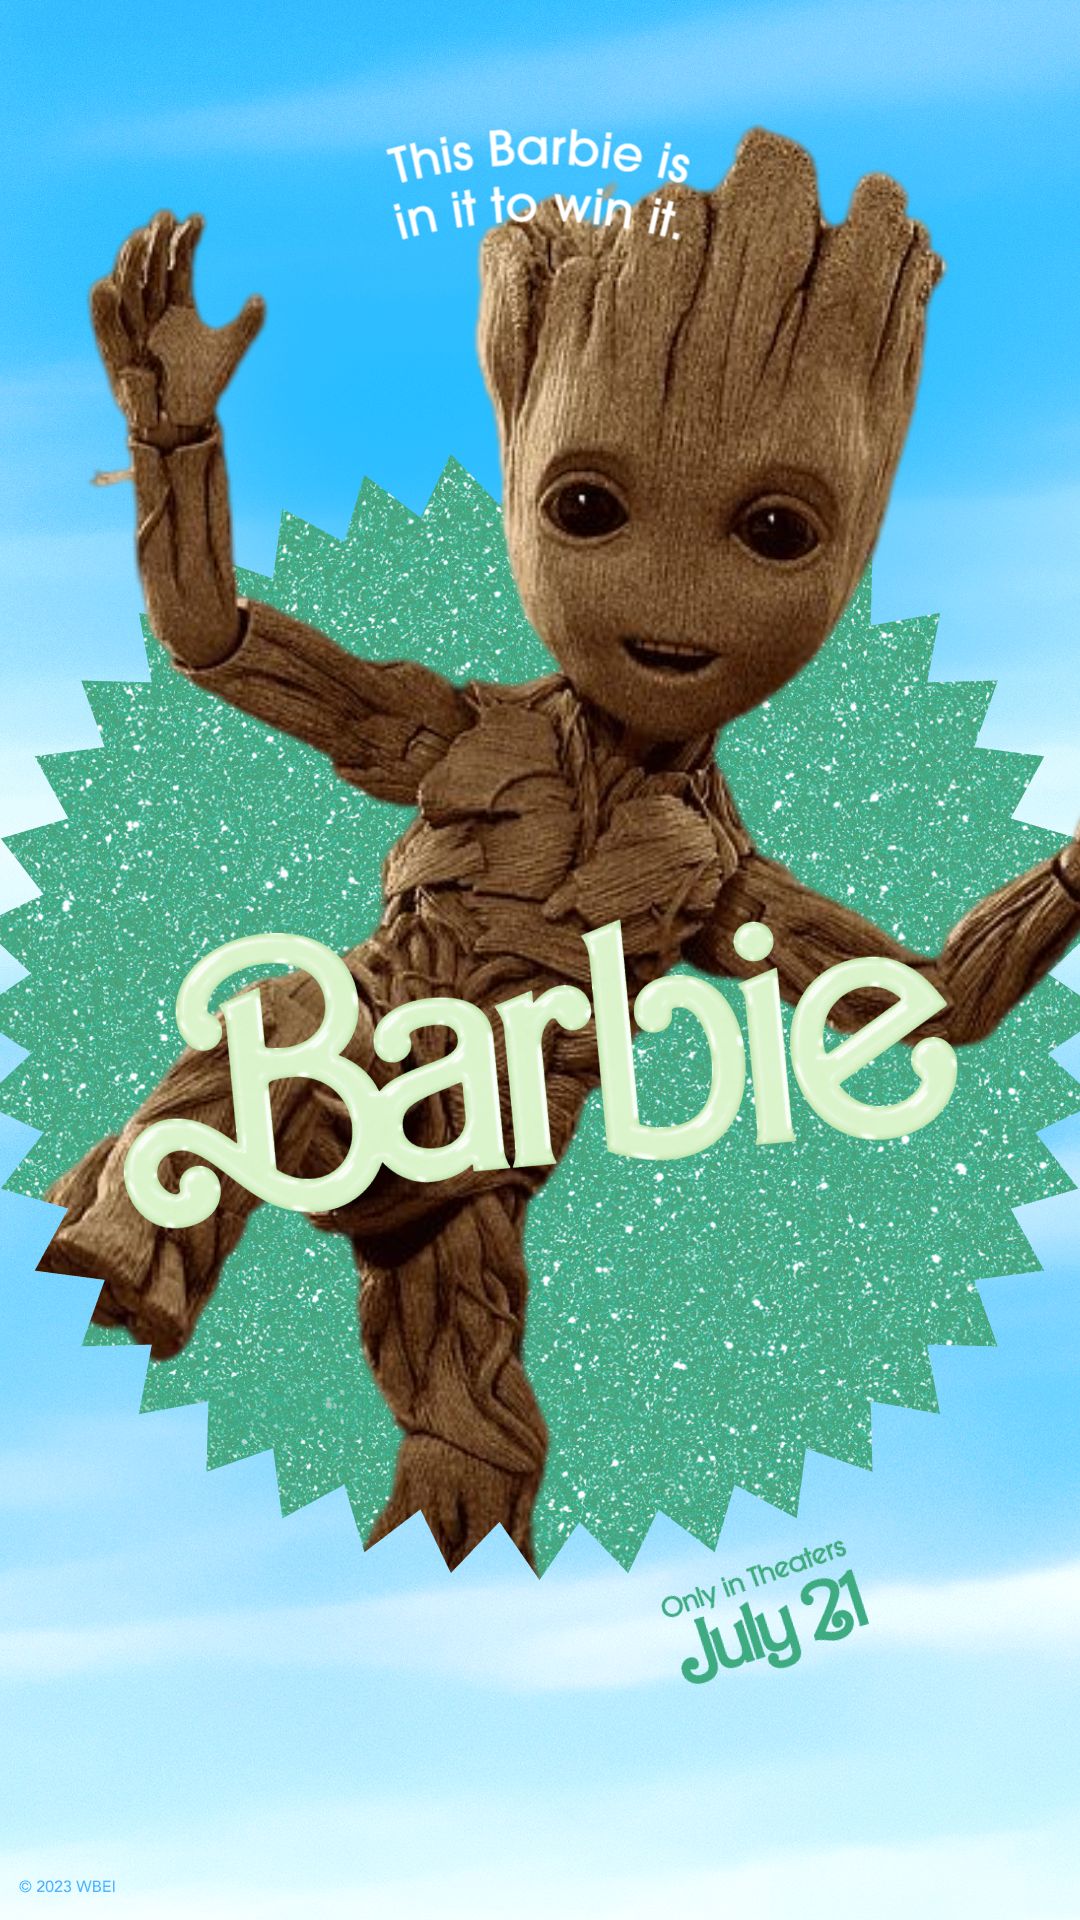 Baby Groot's barbie movie poster